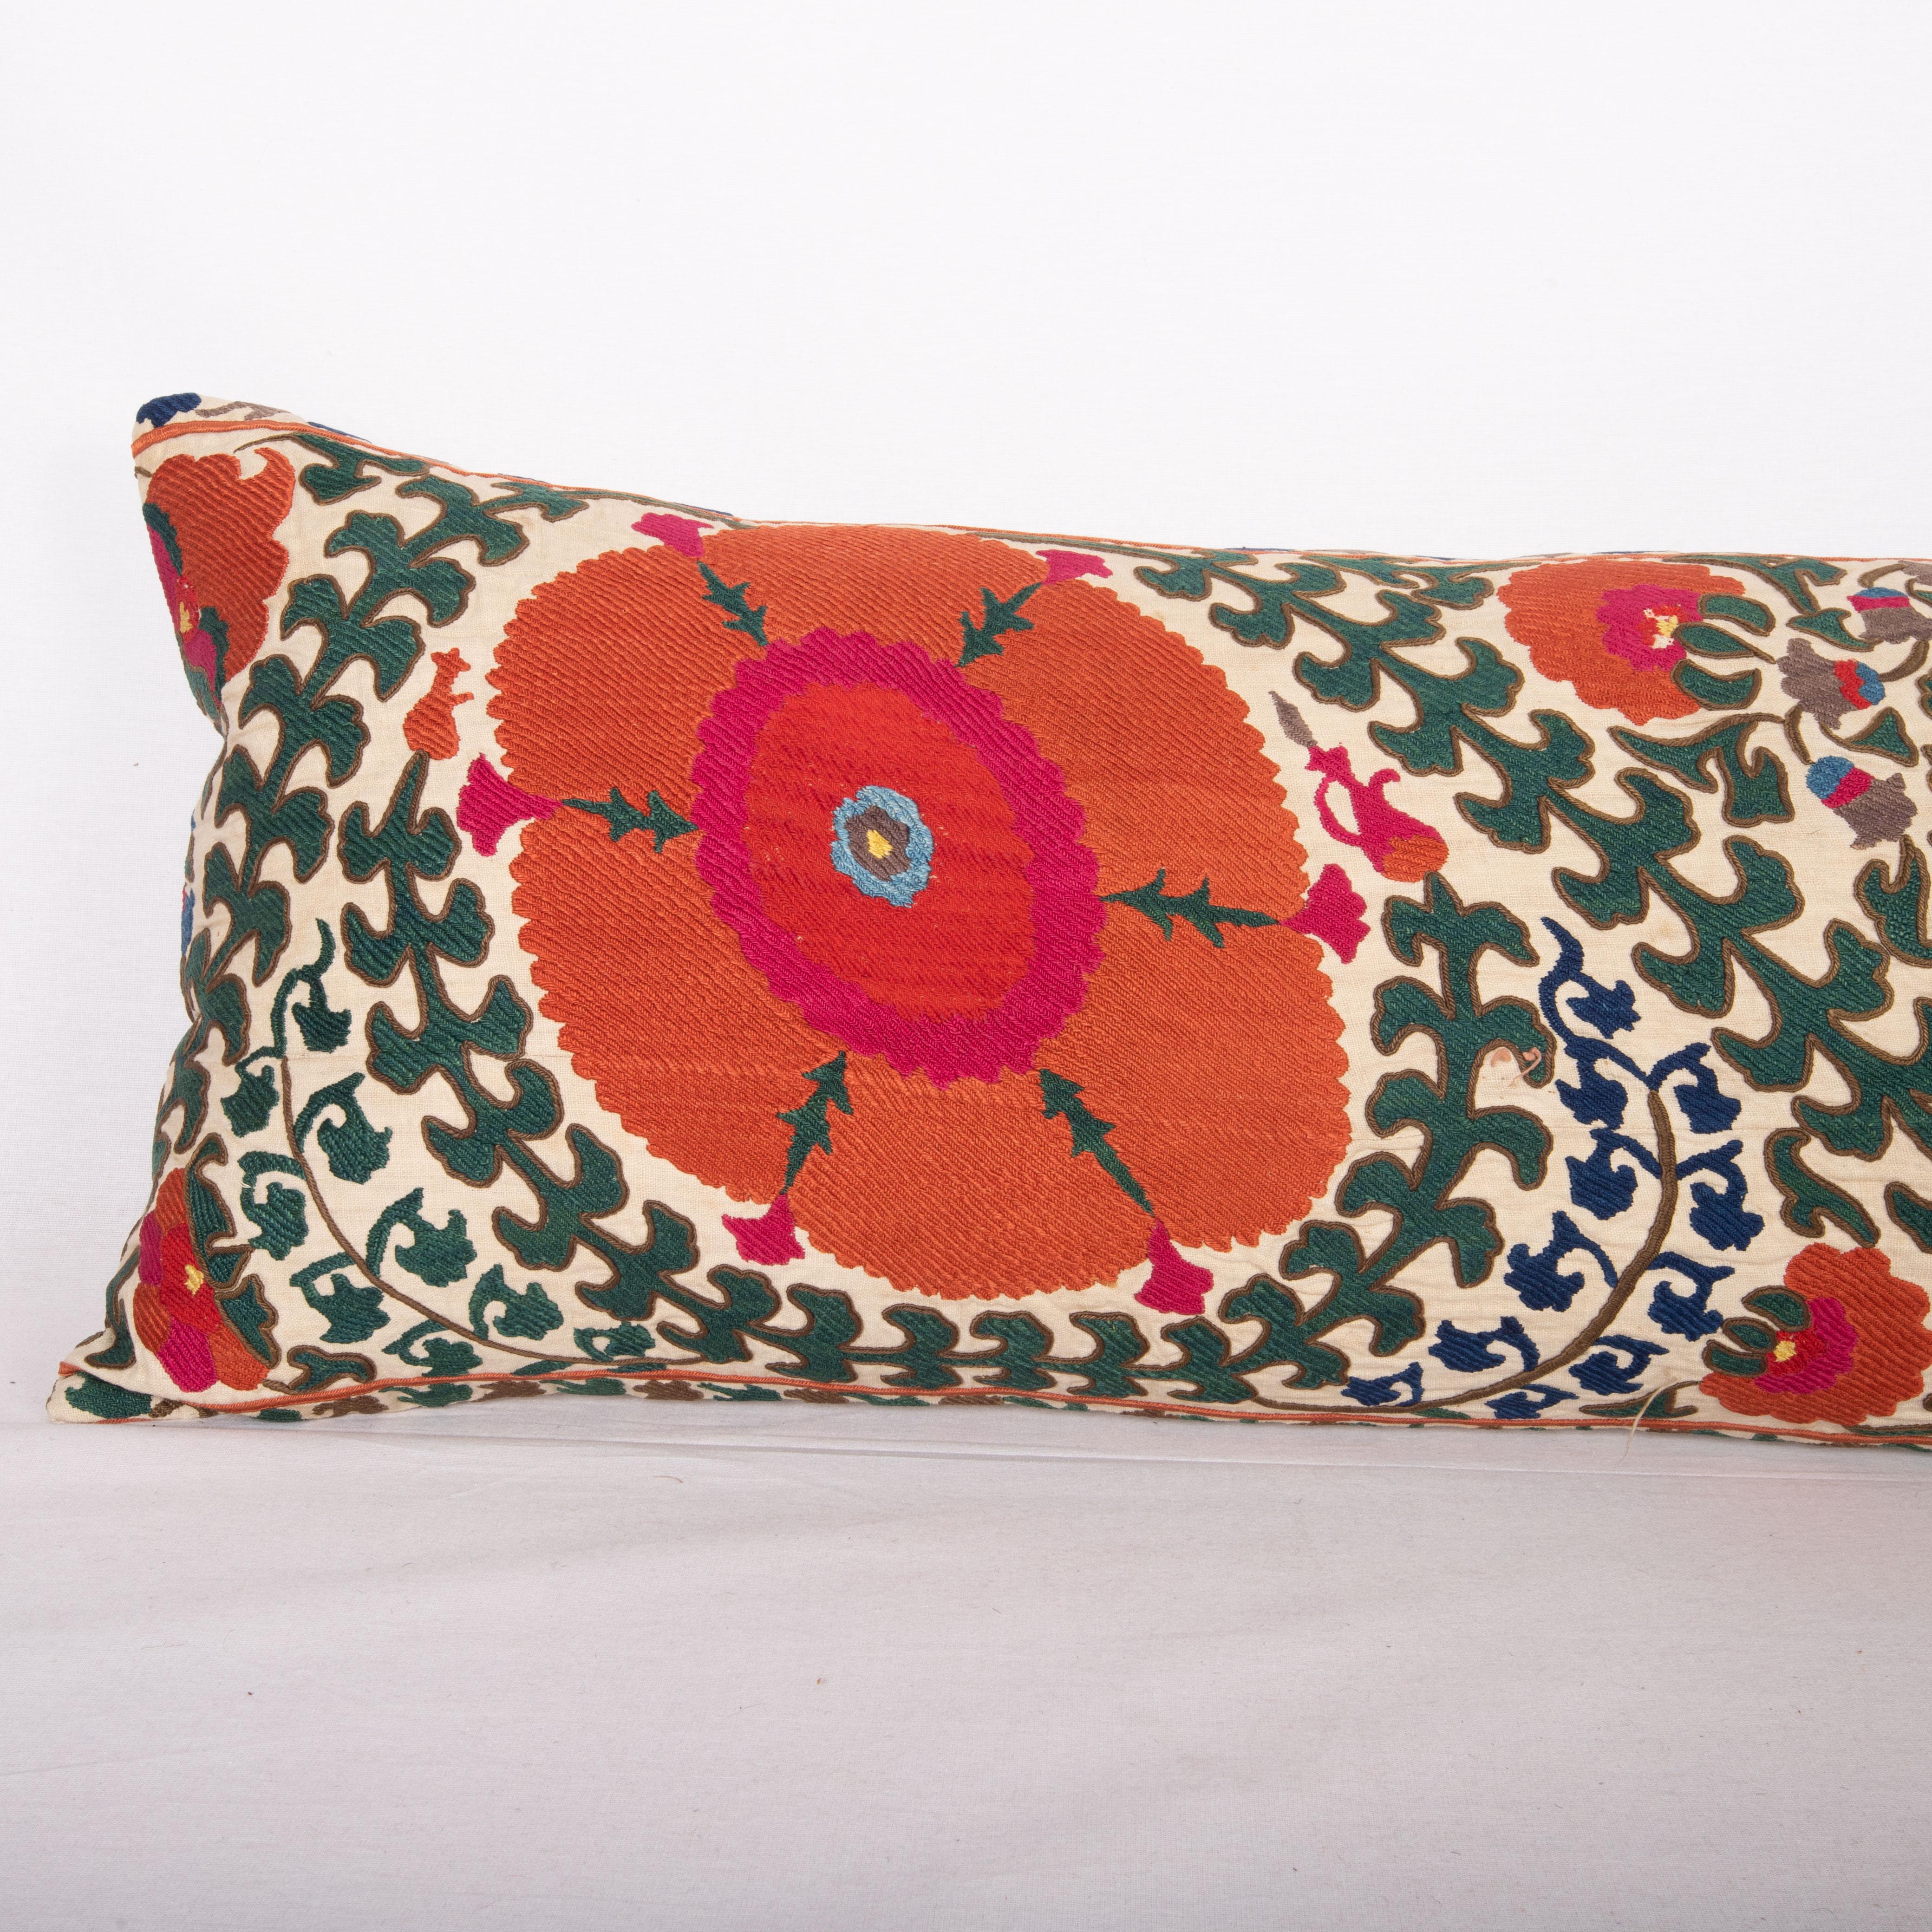 Uzbek Antique Suzani Pillow Case Made from a Mid-1860s Bukhara Suzani